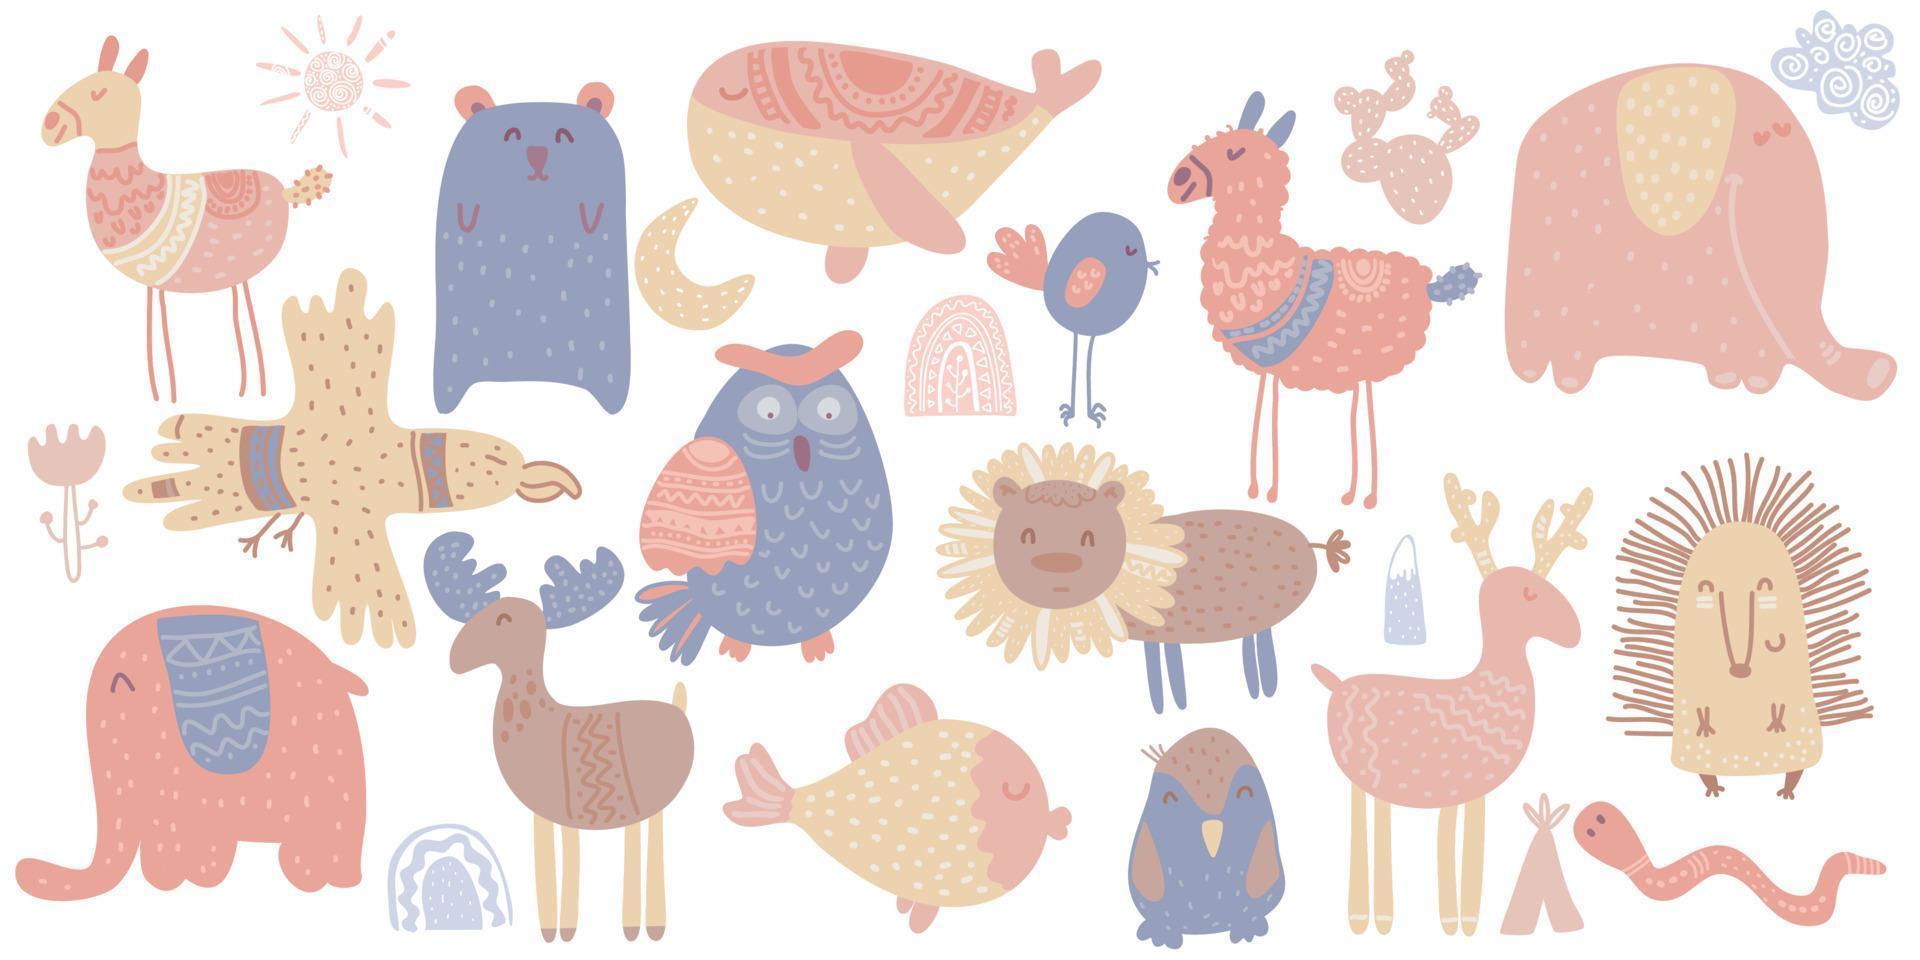 Cute scandinavian animals. Hand drawn. Doodle cartoon animals for nursery posters, cards, t-shirts. Vector illustration. Lama, whale, deer, elk, lion, owl, elephant, bird, eagle, fish